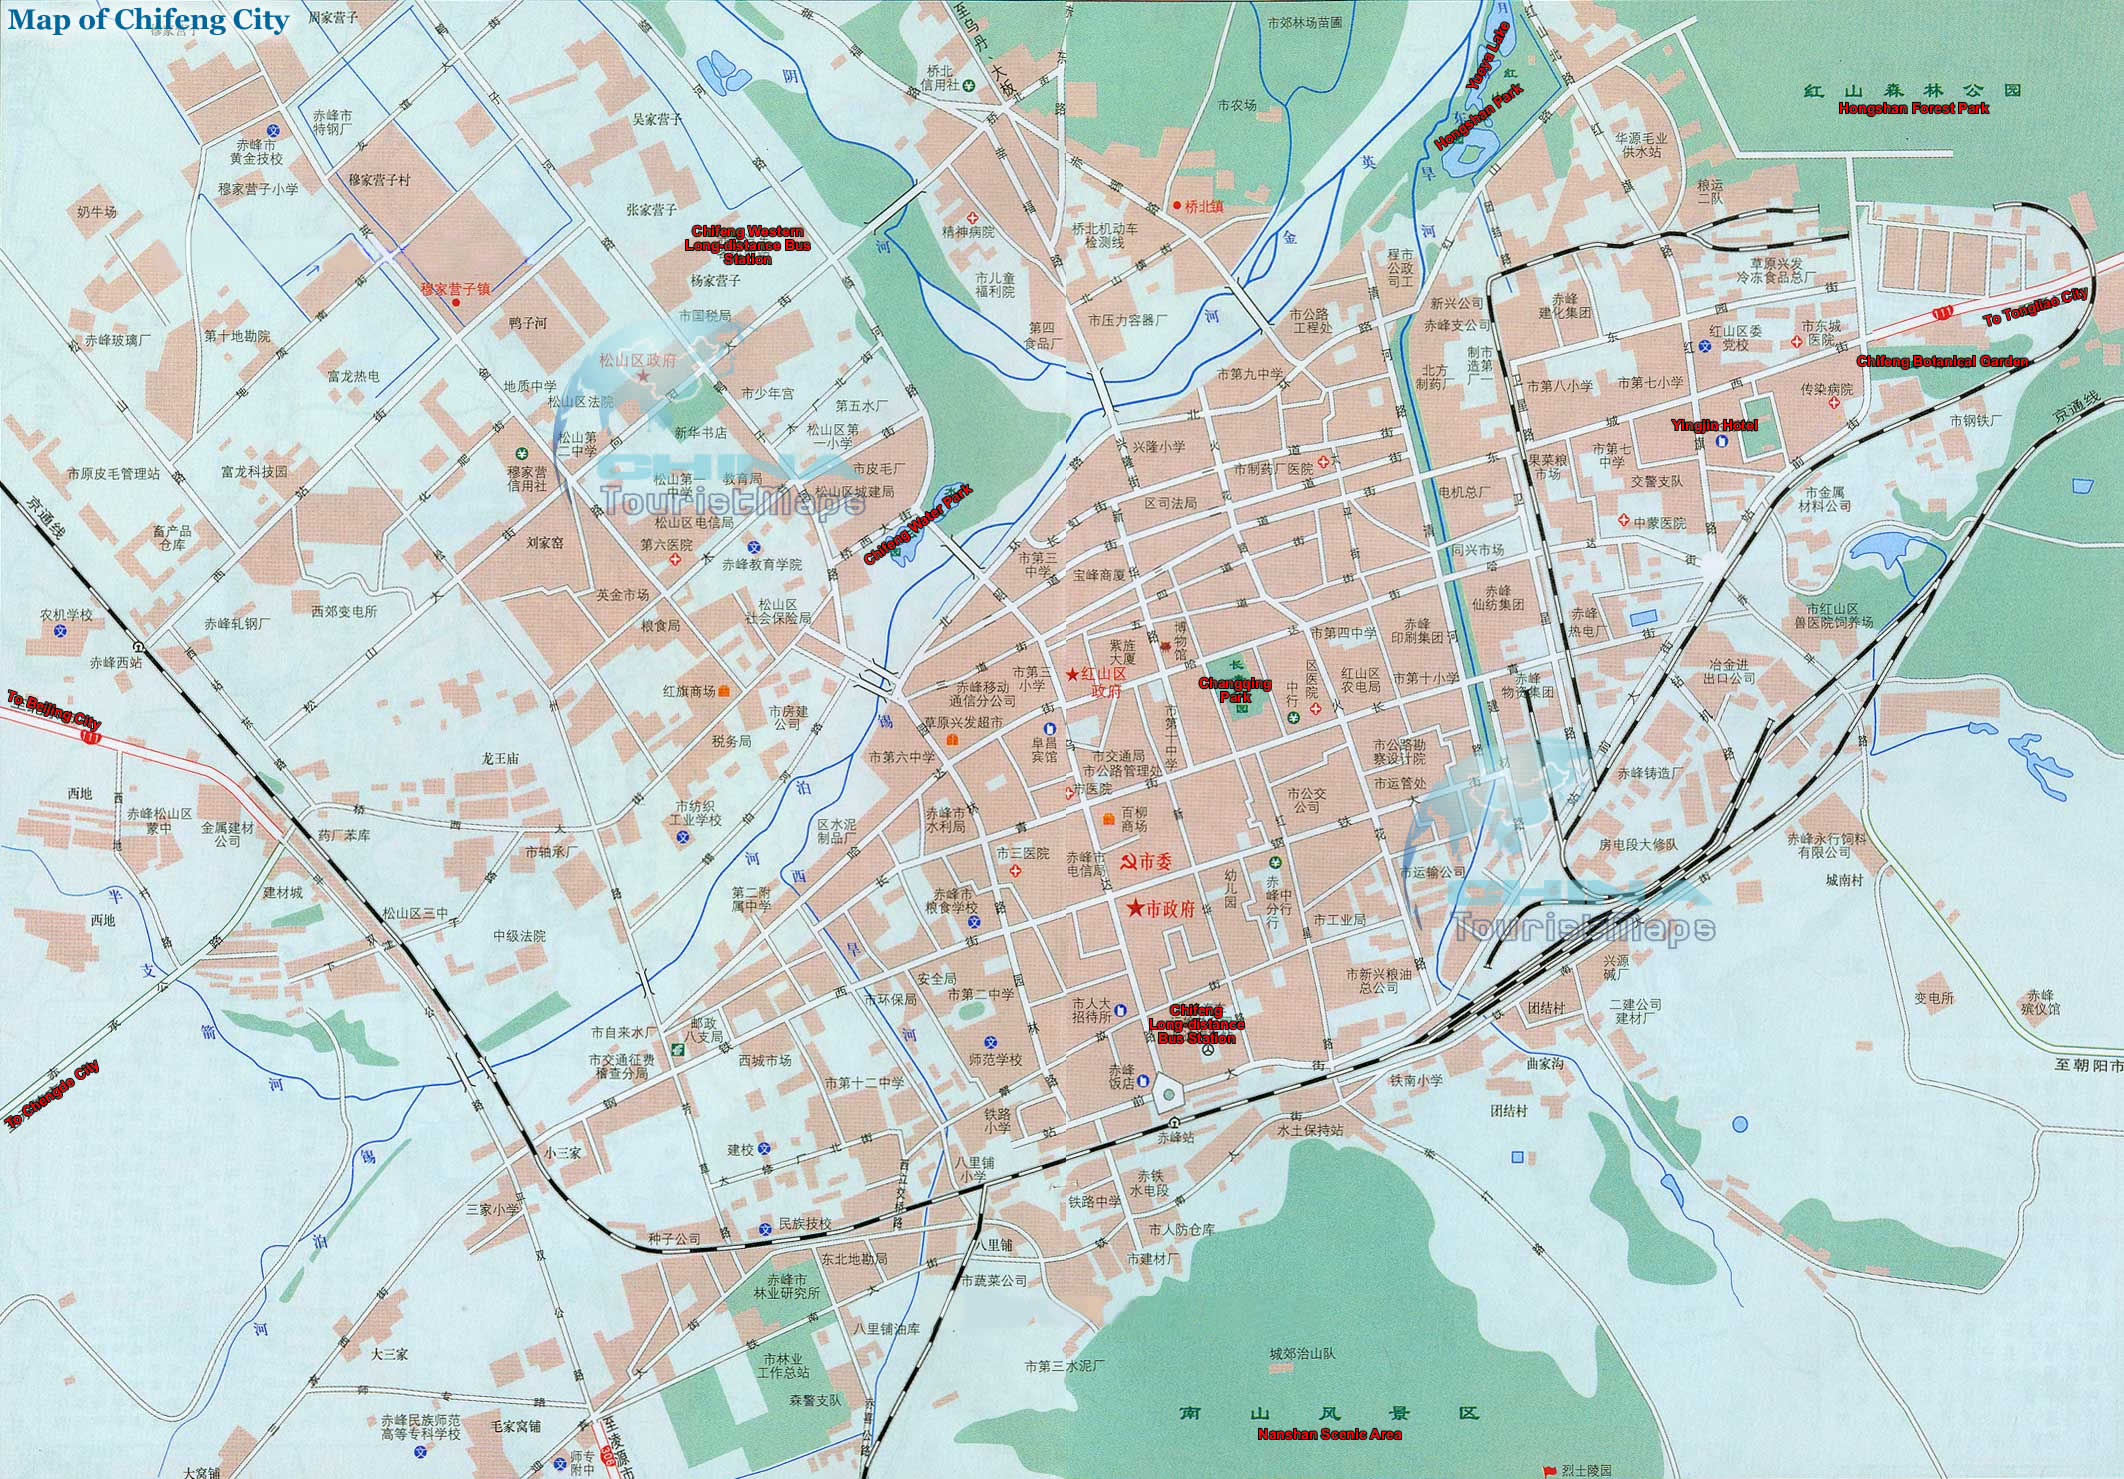 Chifeng city map